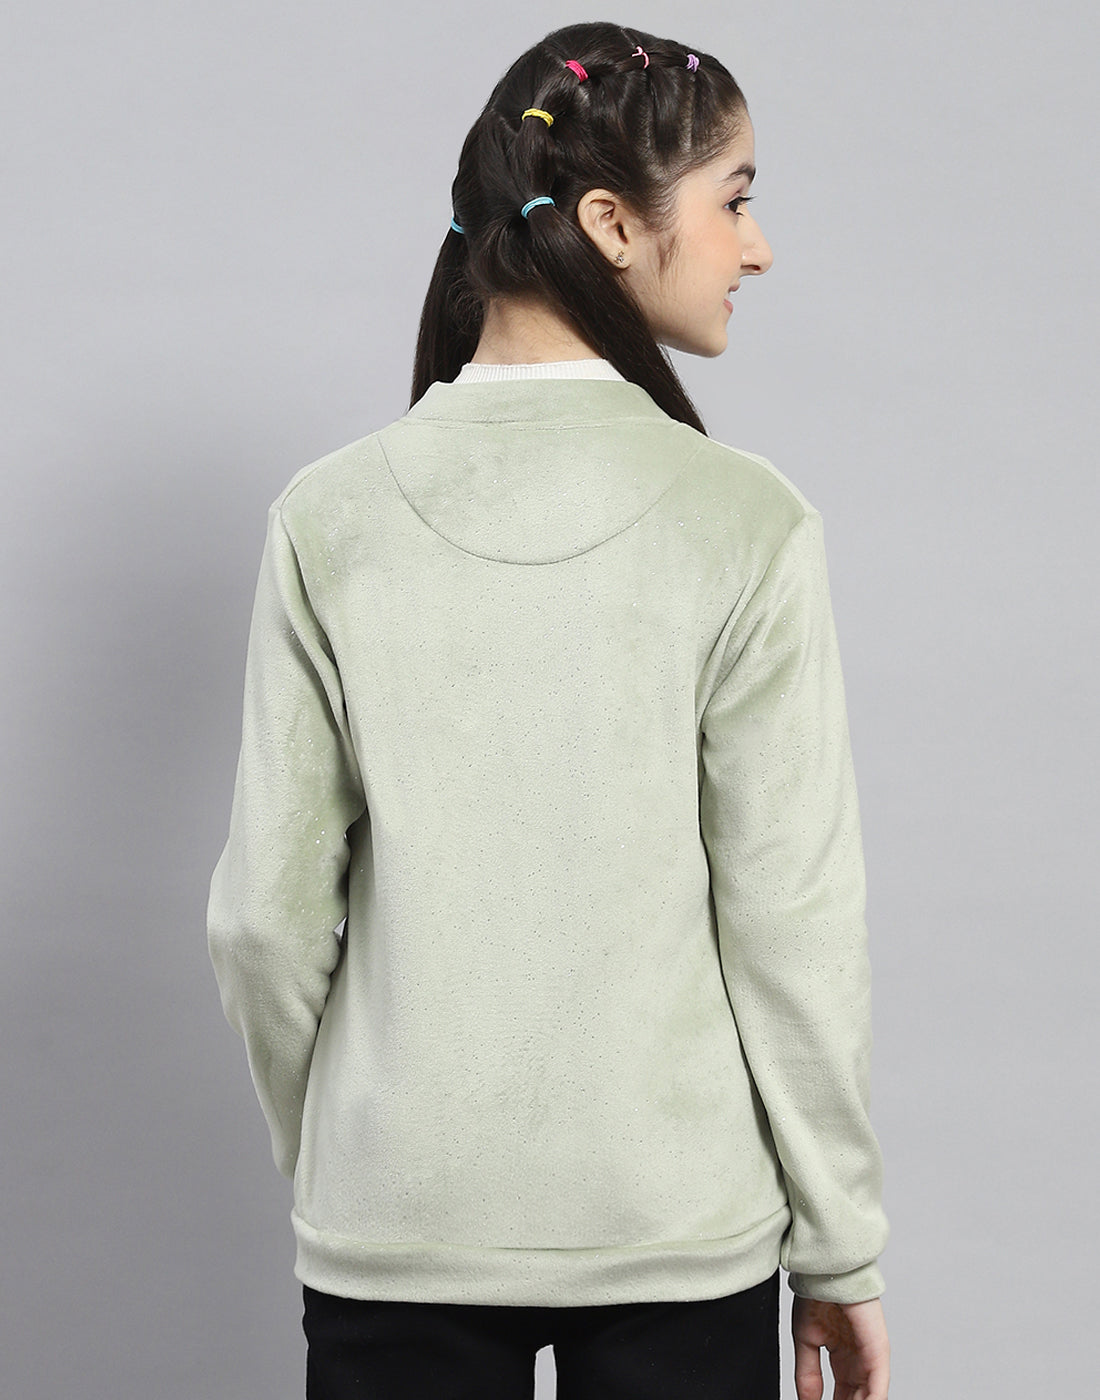 Girls Green Embellished Stand Collar Full Sleeve Sweatshirt